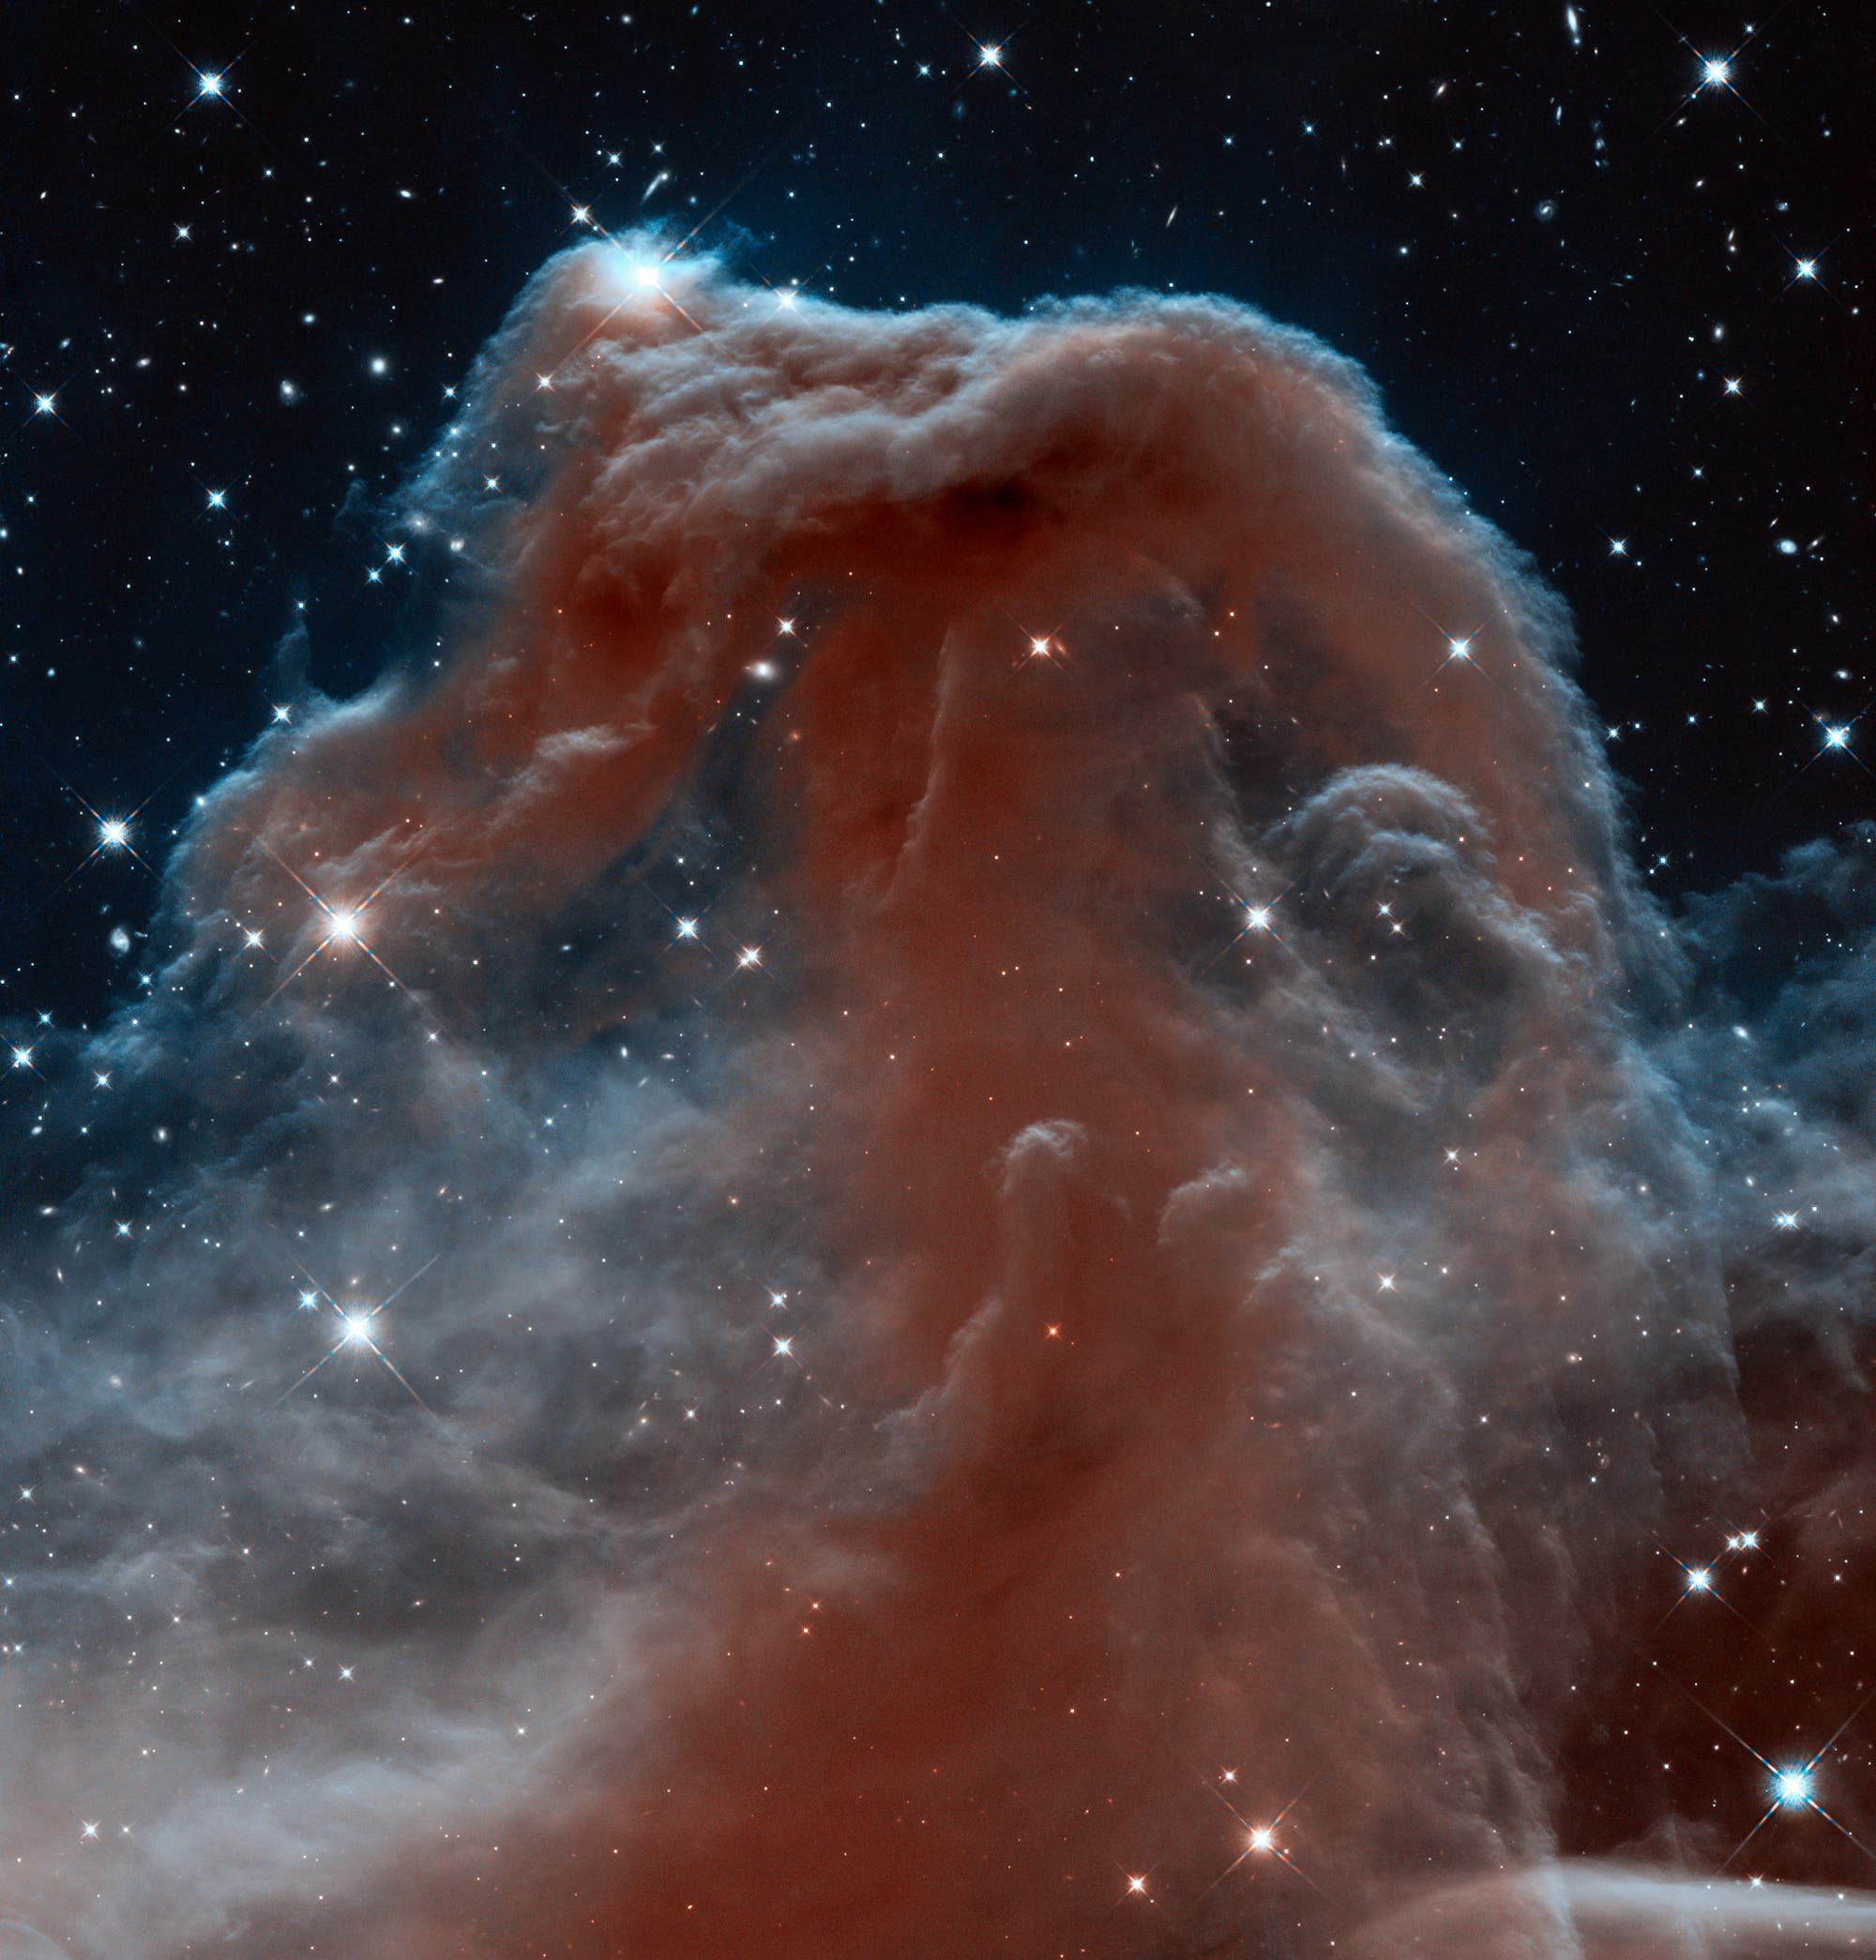 Der Pferdekopfnebel Barnard 33 im nahen Infrarot